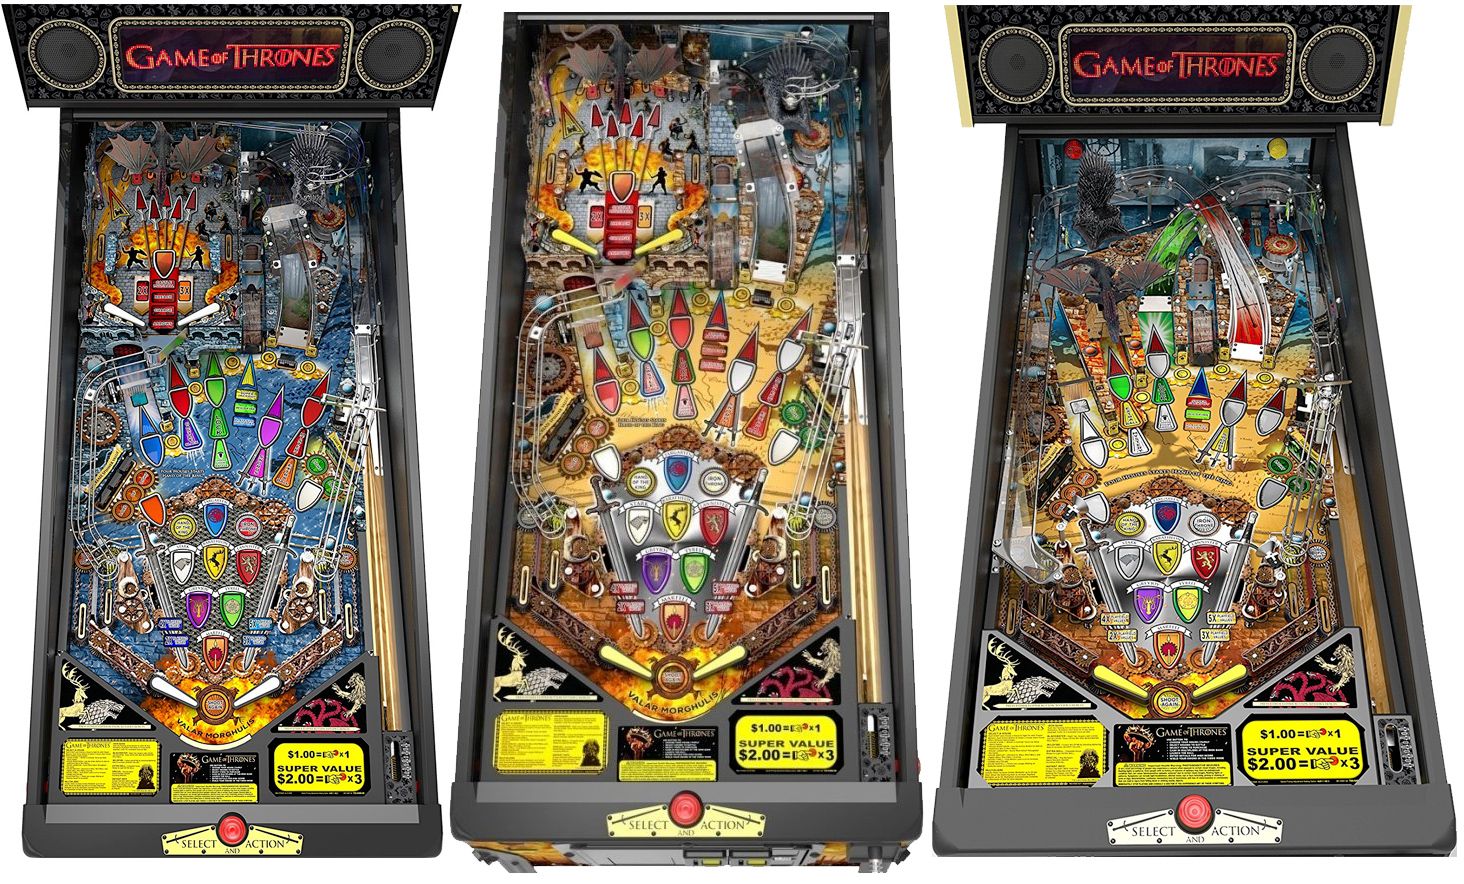 Game-of-Thrones-Pinball-Arcade-Pinball-Machine-01a